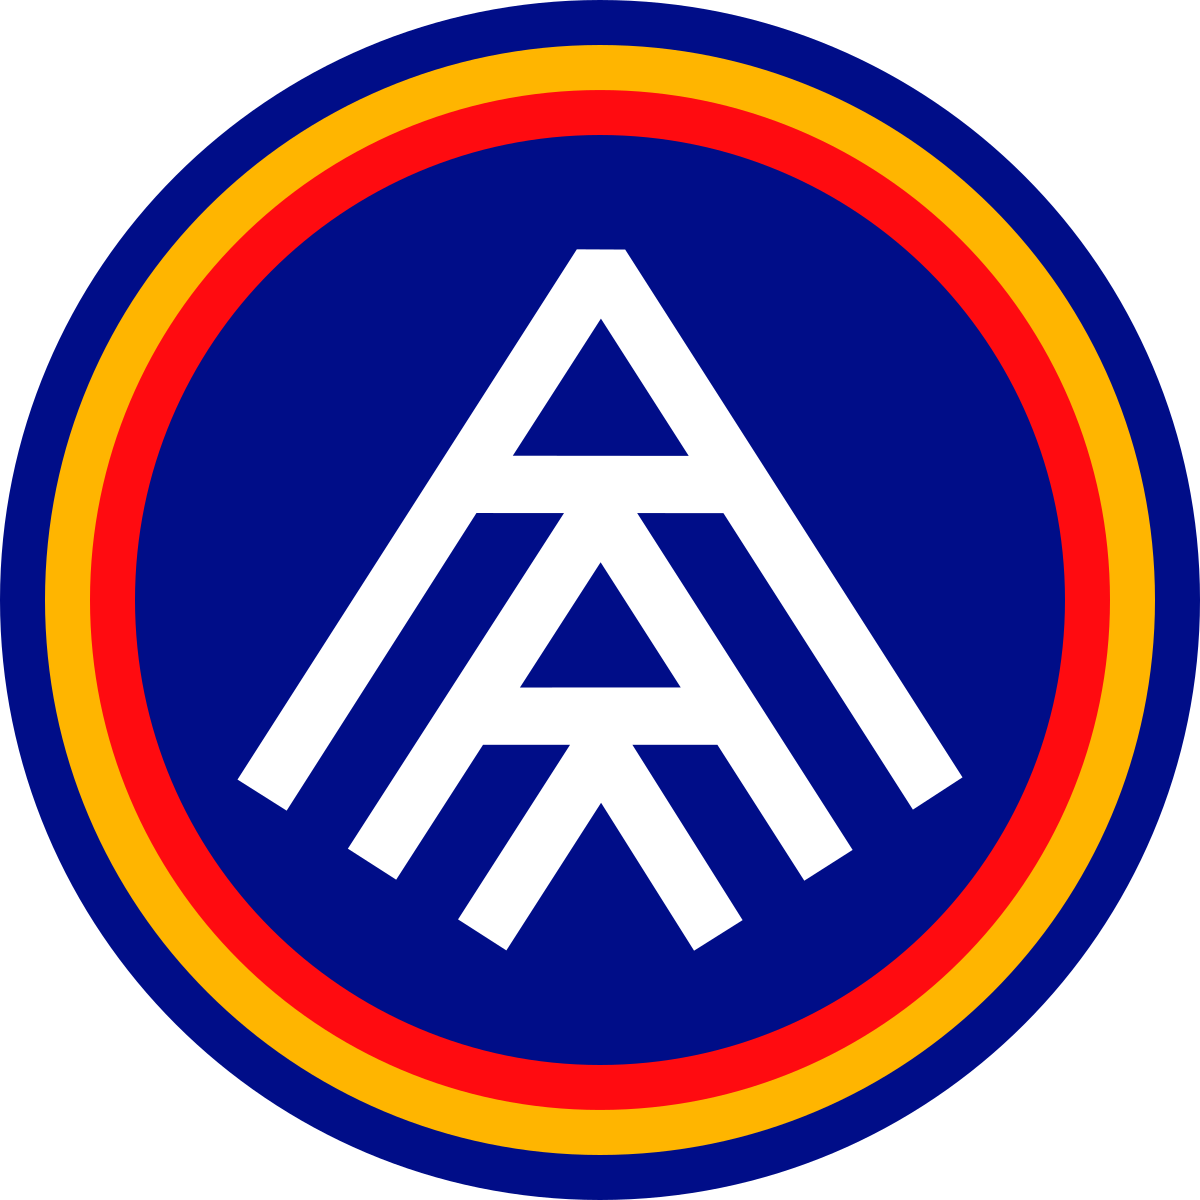 FC Andorra - Wikipedia